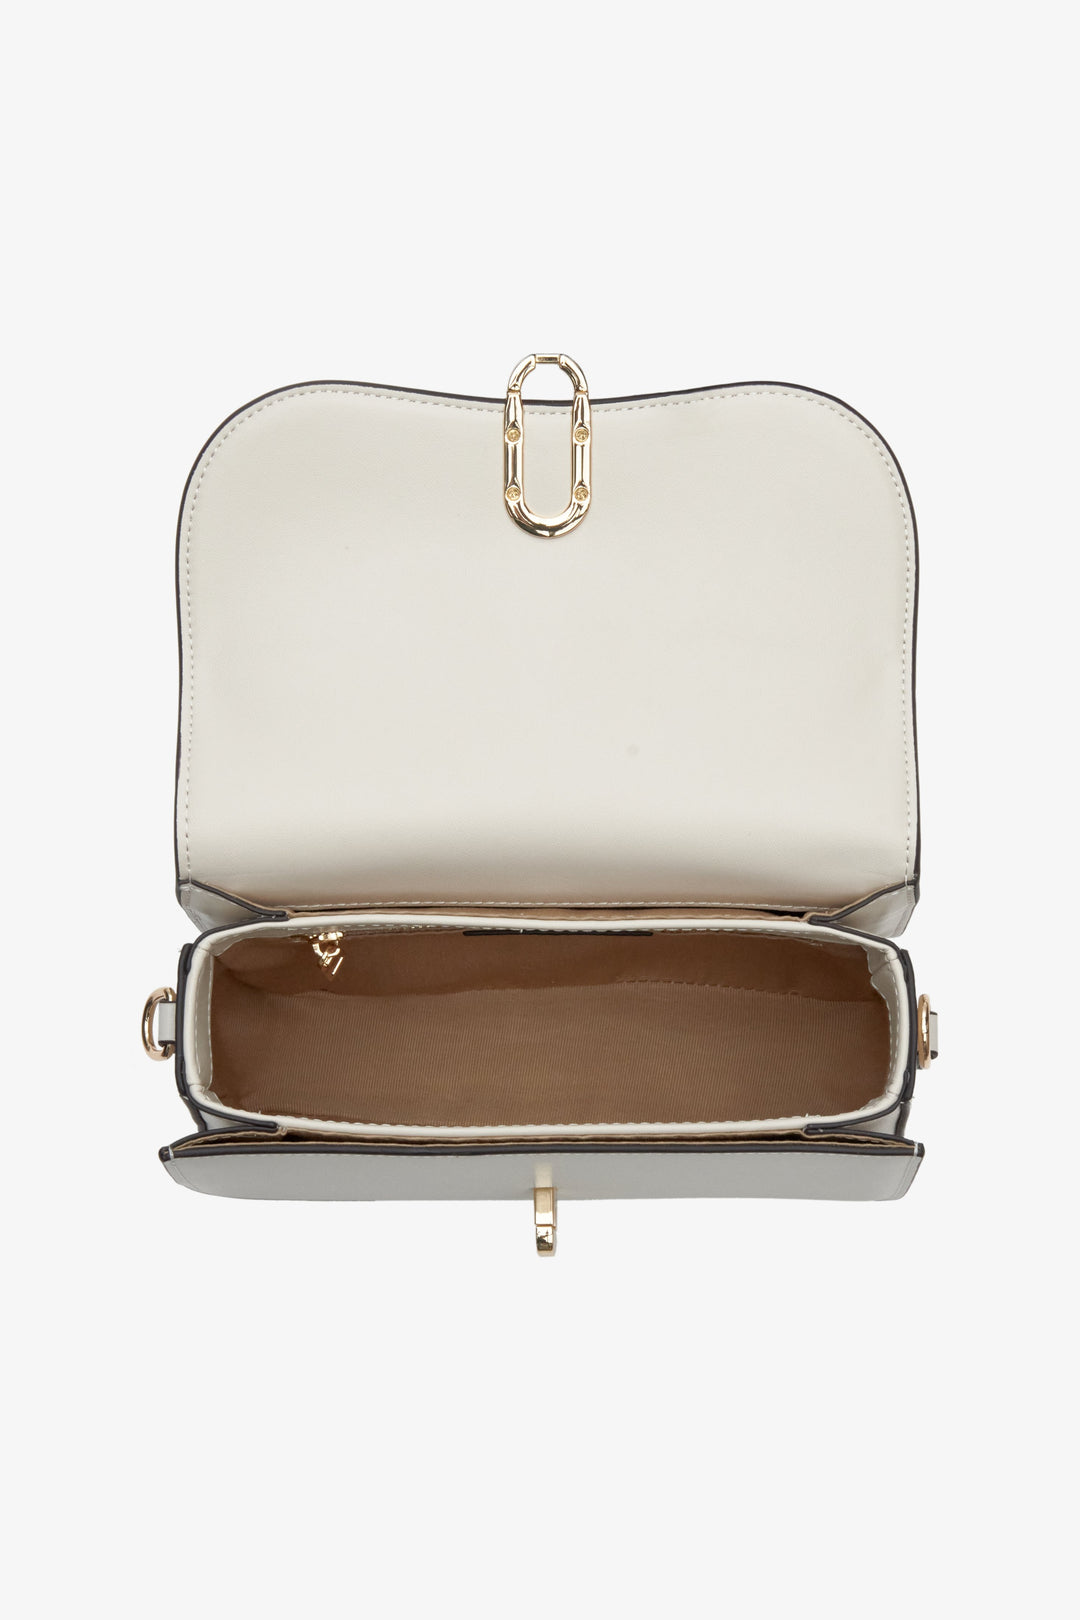 Stylish, white women's handbag Estro made of genuine leather - close-up on details.